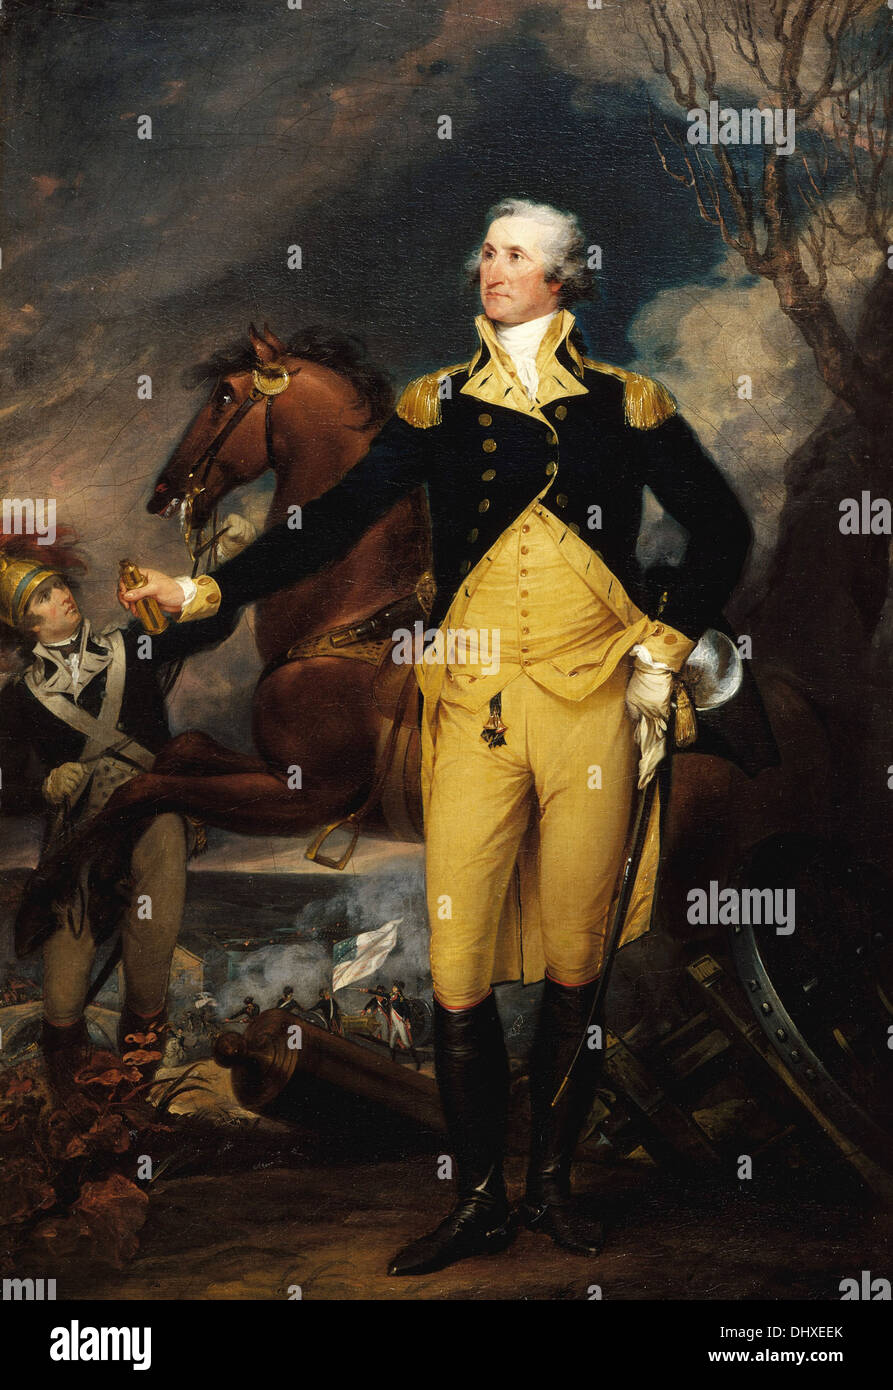 George Washington before Battle of Trenton - by John Trumbull, 1795 Stock Photo